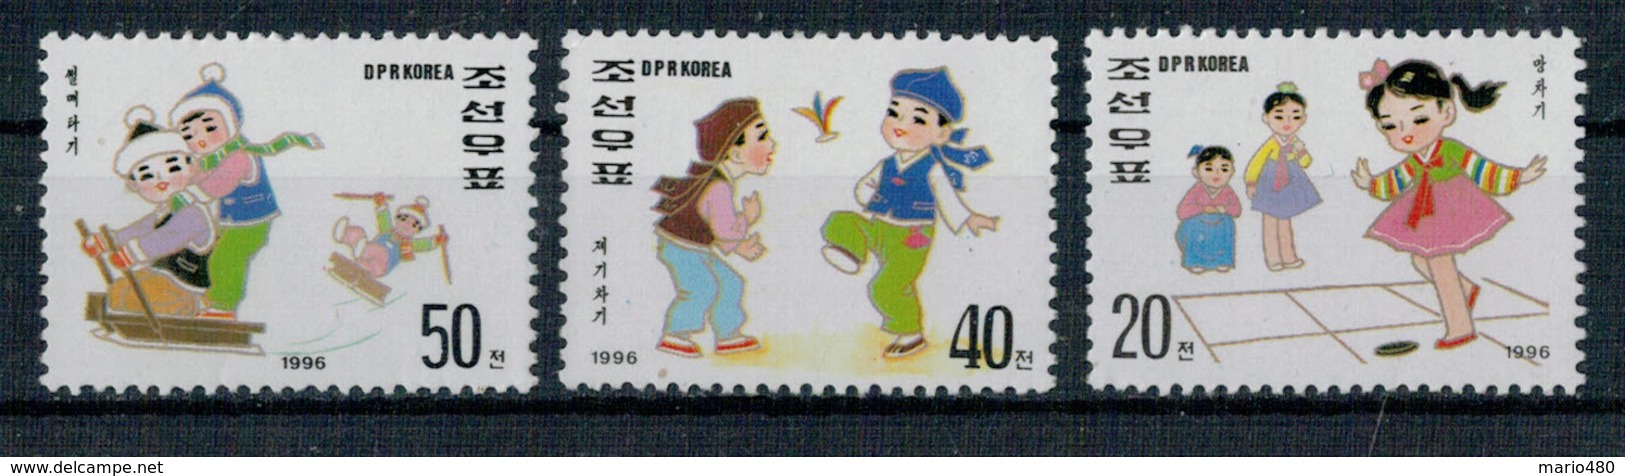 1996     CHILDREN'S  GAMES        3  STAMPS  MNH - Corée (...-1945)